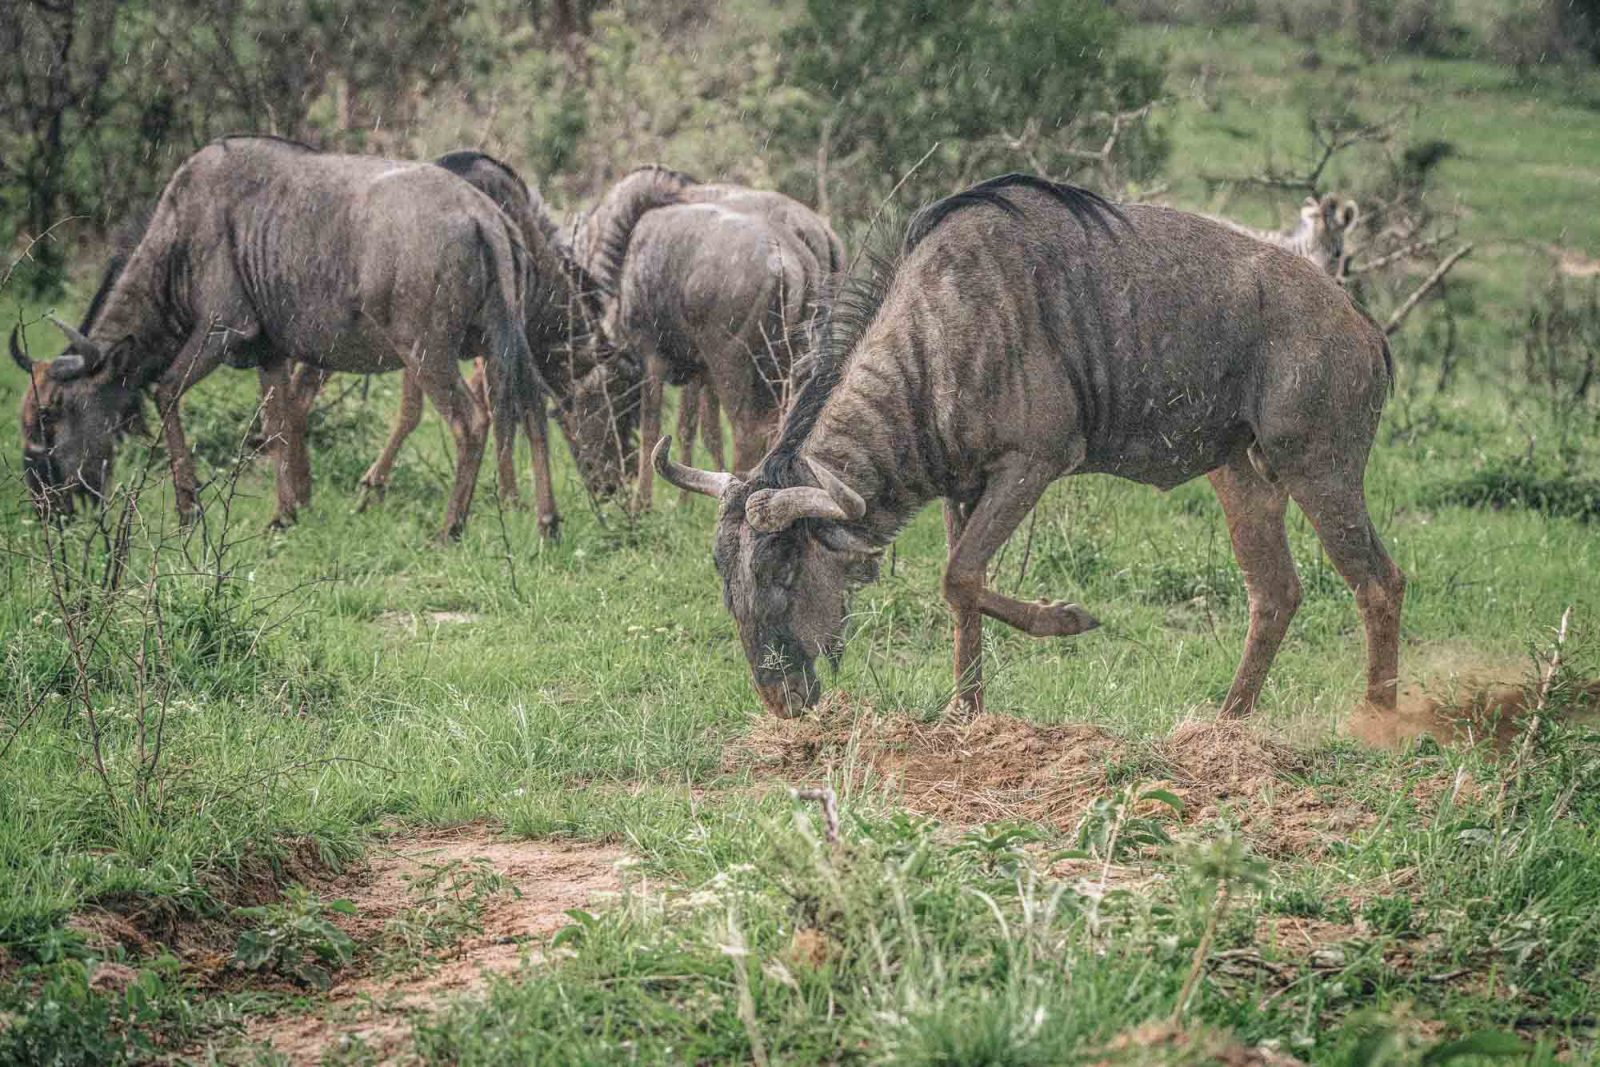 South Africa South Africa iMfolozi Park safari wildebeest 03848